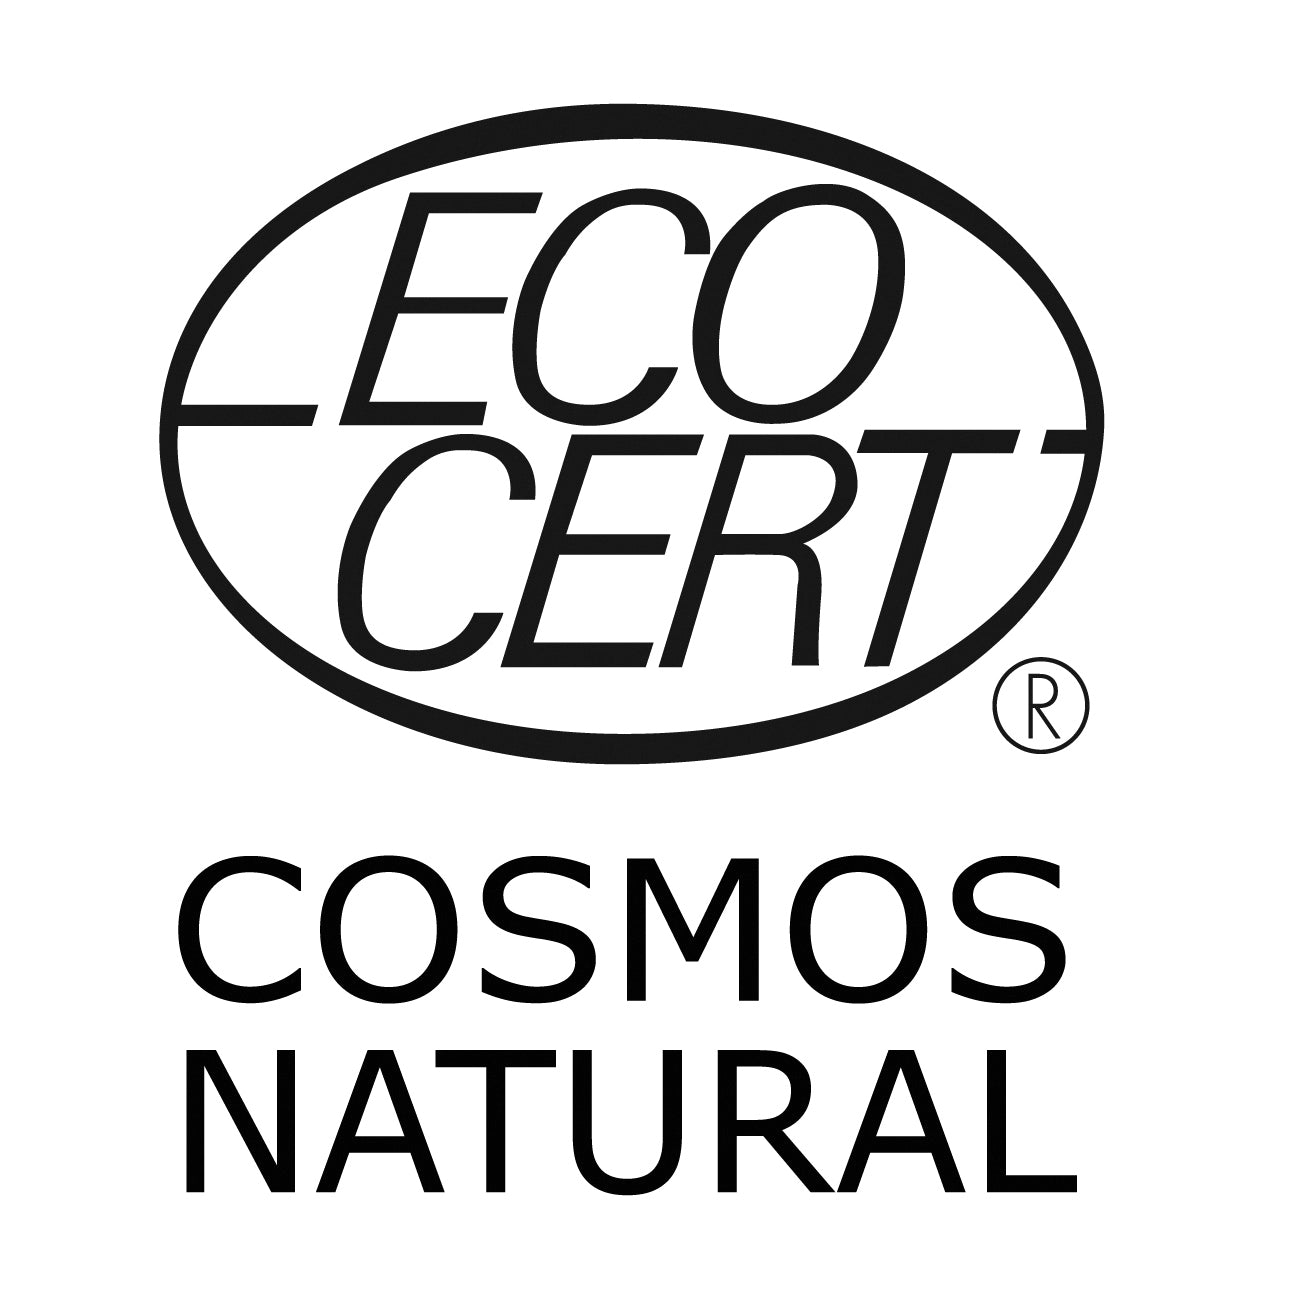 ecocert natural plant-based milk facial cleanser